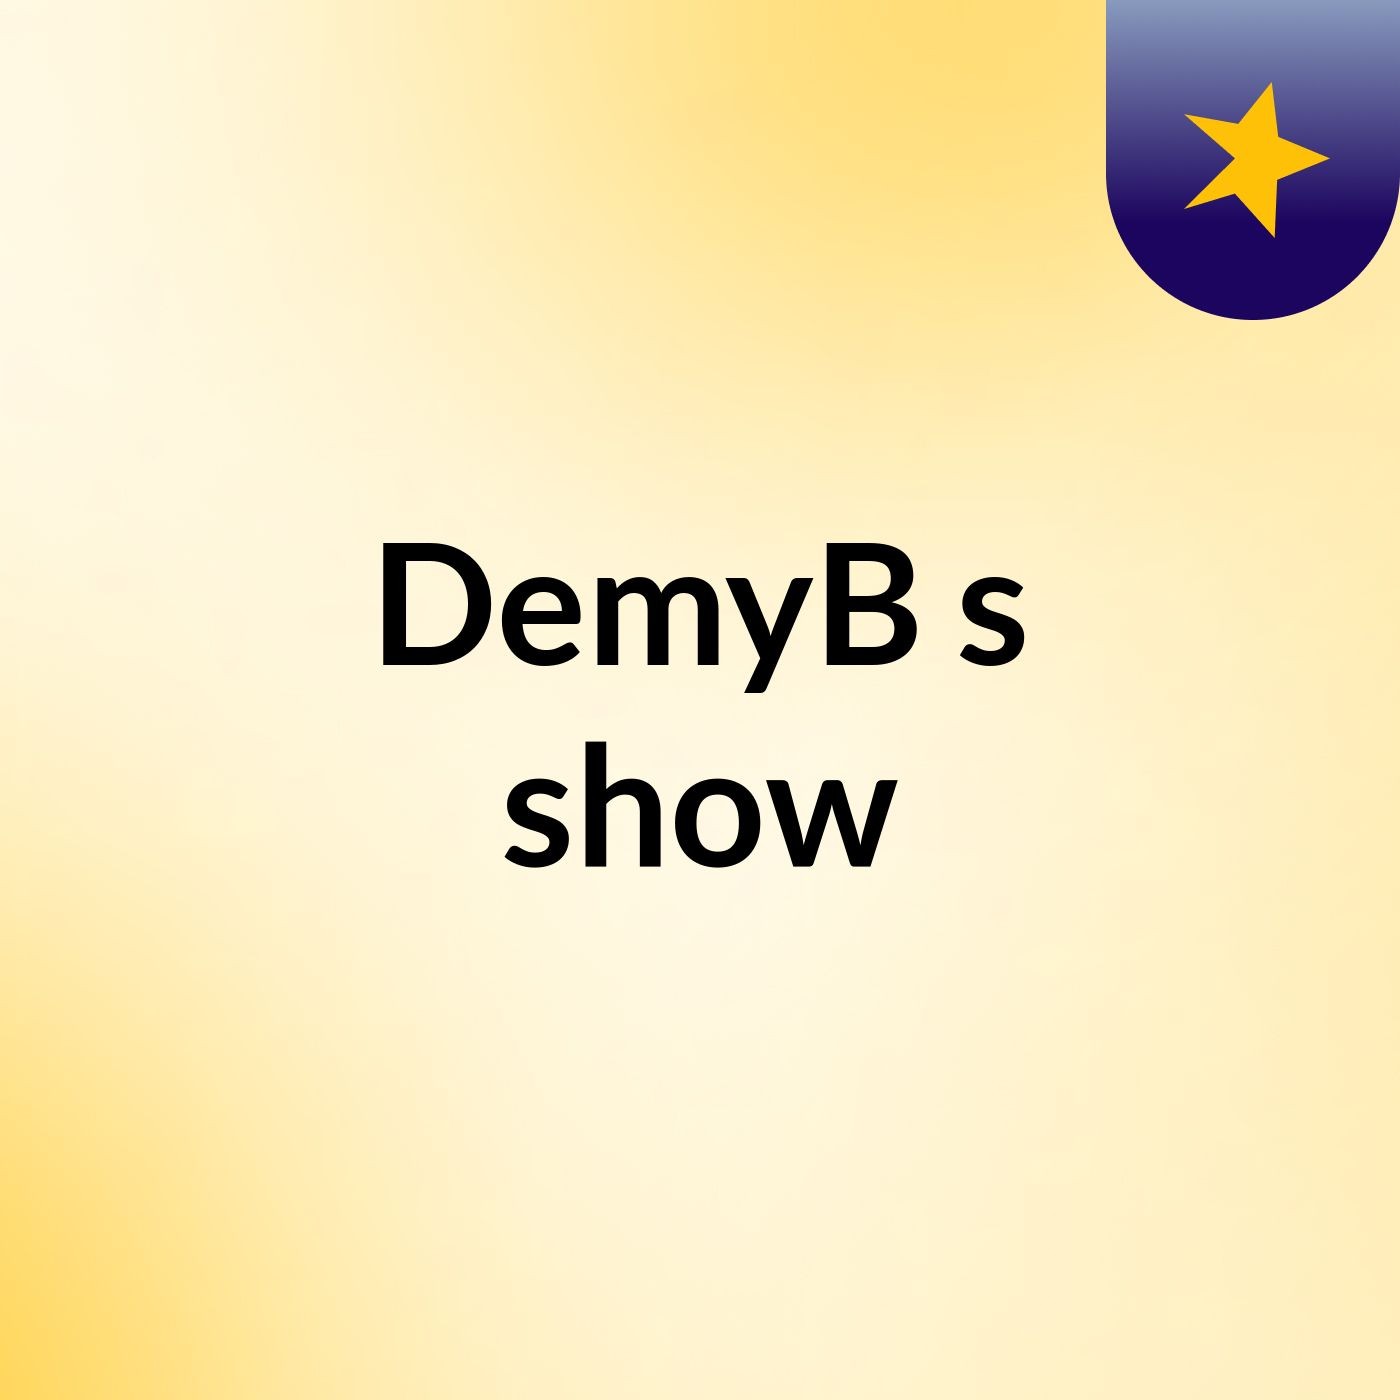 DemyB's show